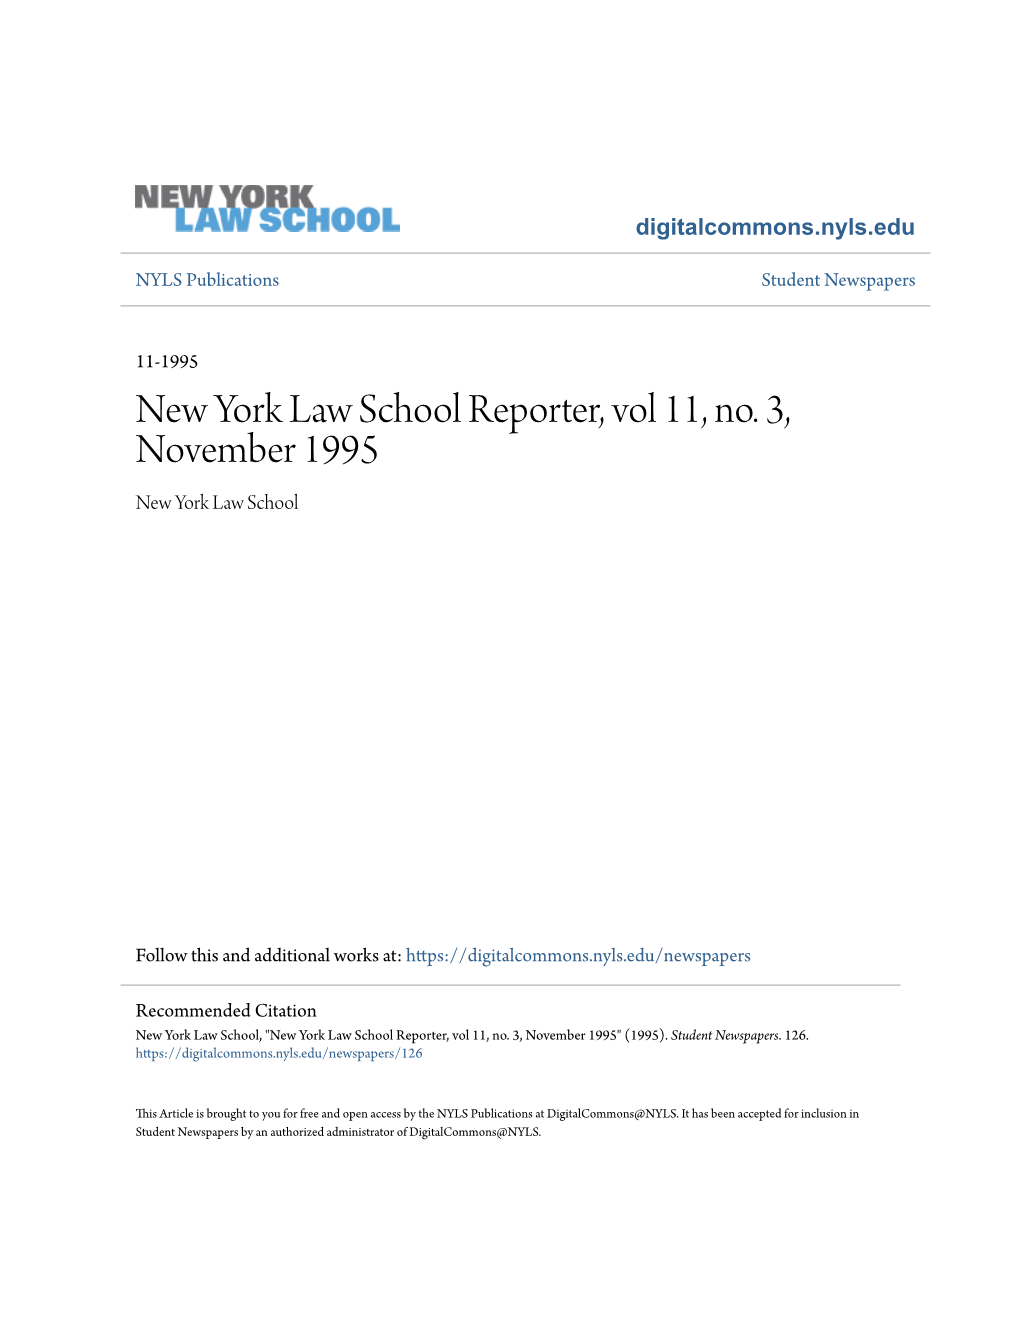 New York Law School Reporter, Vol 11, No. 3, November 1995 New York Law School